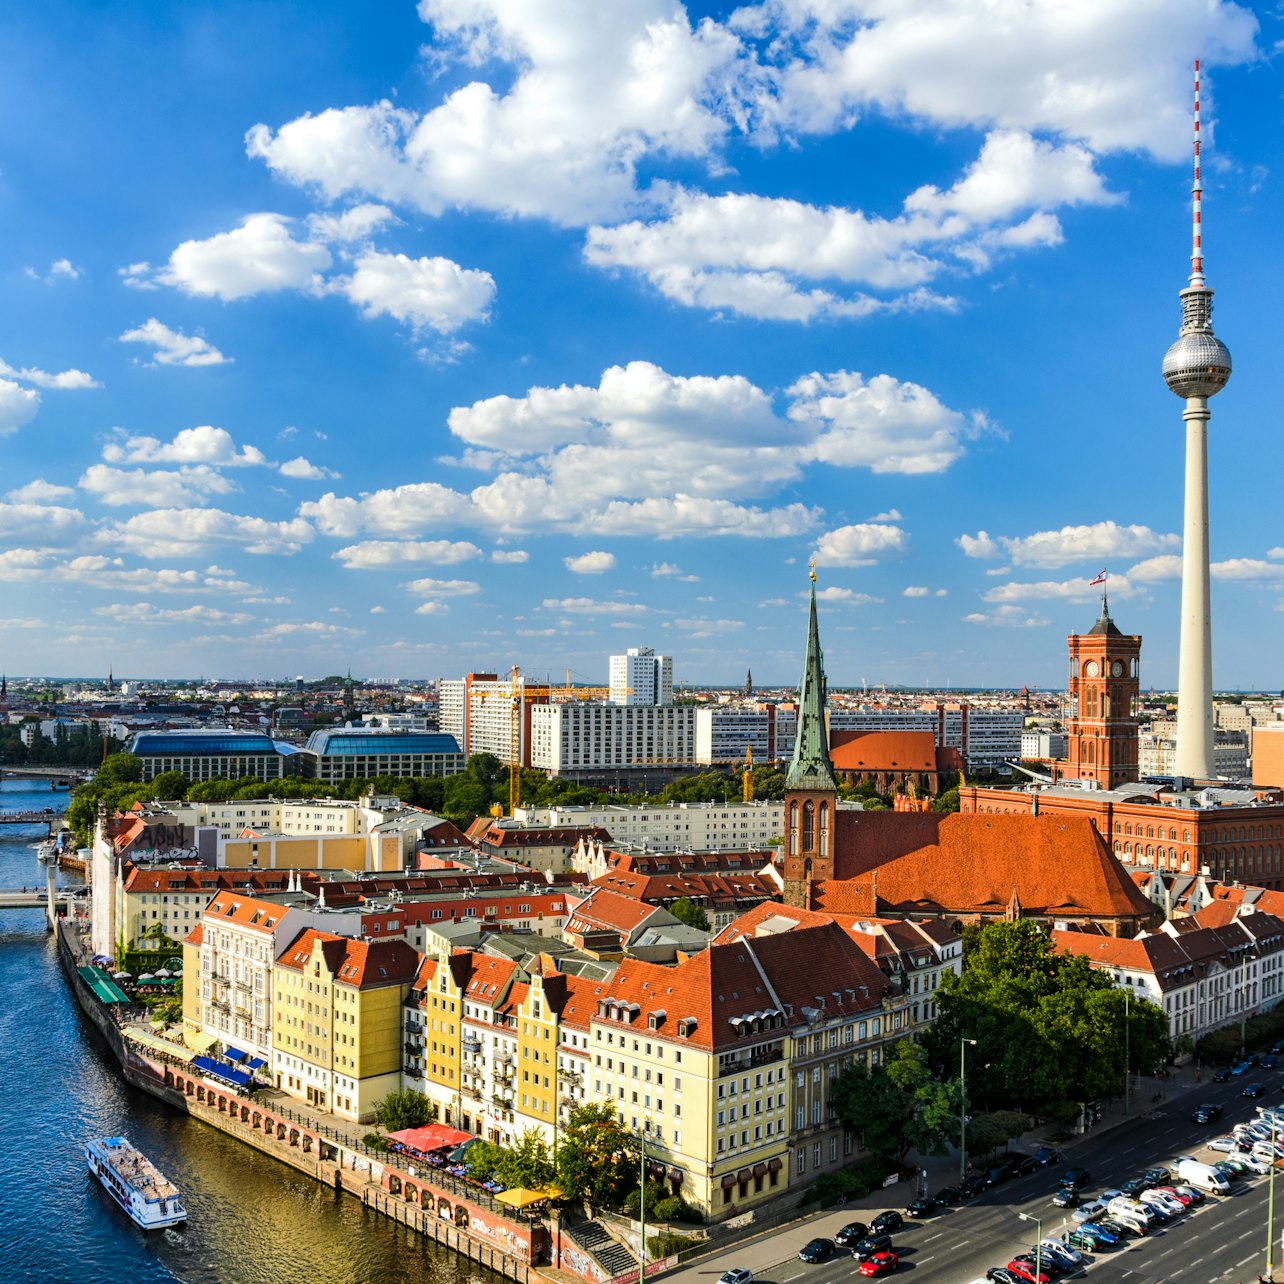 Berlin TV Tower: Highest Afternoon Break - Accommodations in Berlin